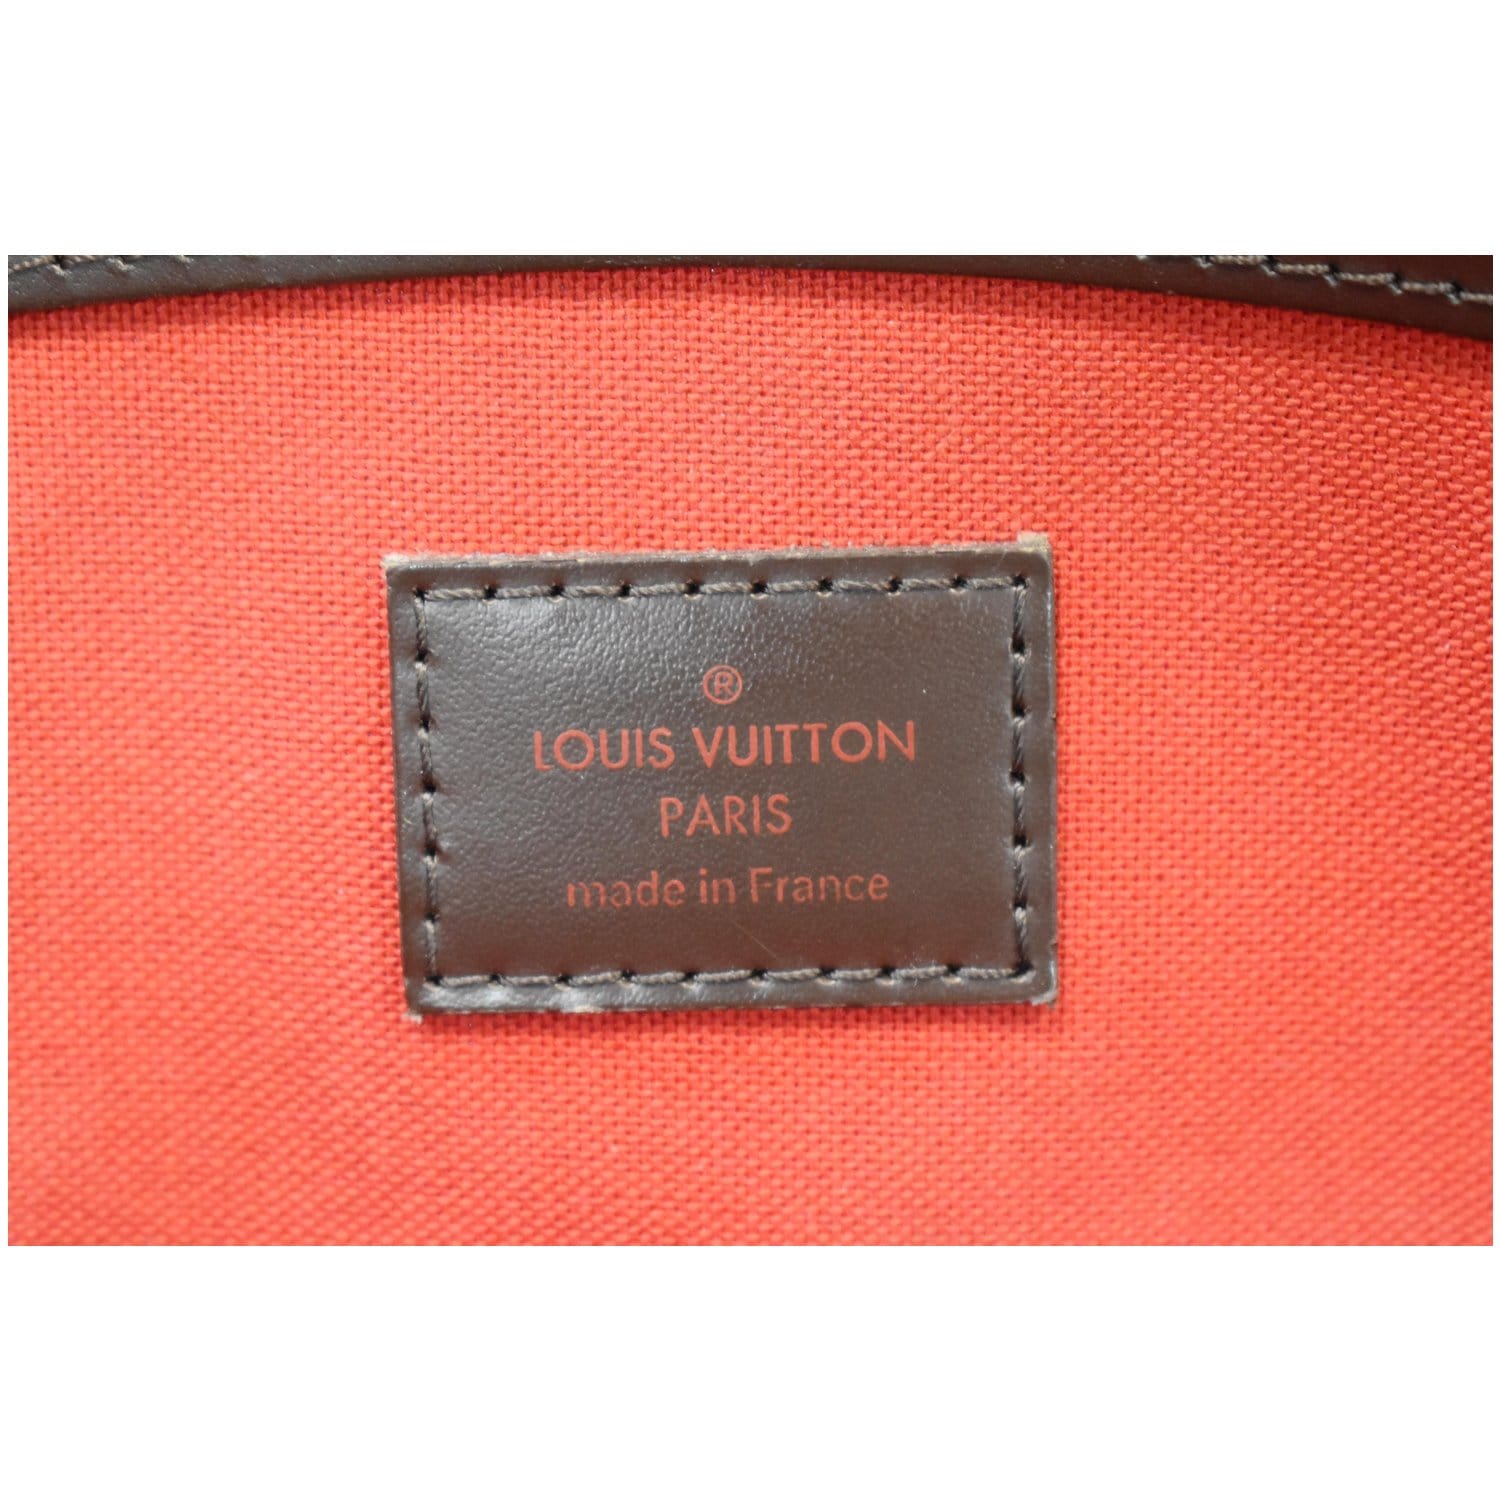 $1,870 LOUIS VUITTON VERONA MM DAMIER N41118 Brown Shoulder Bag